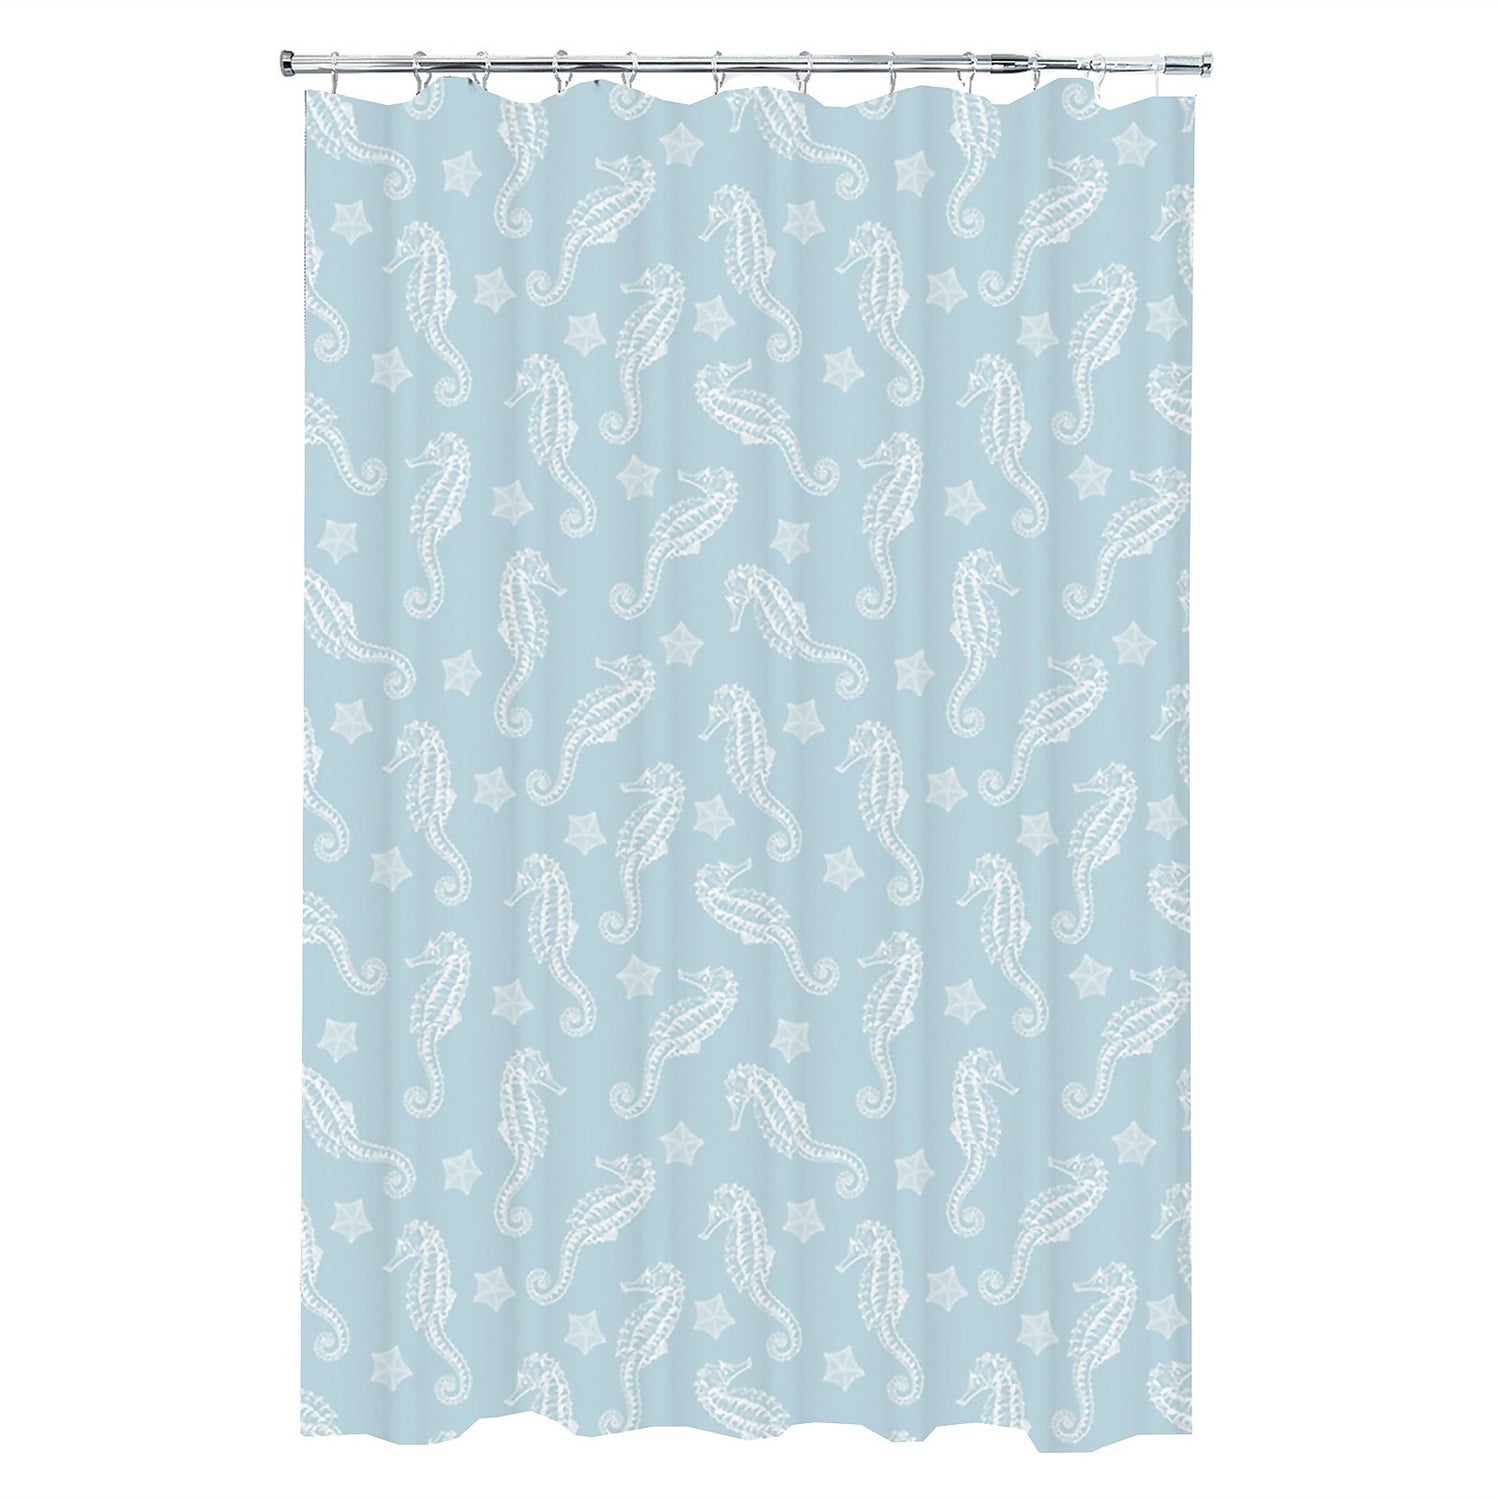 Seahorse Shower Curtain Homebase, Seahorse Shower Curtain Set